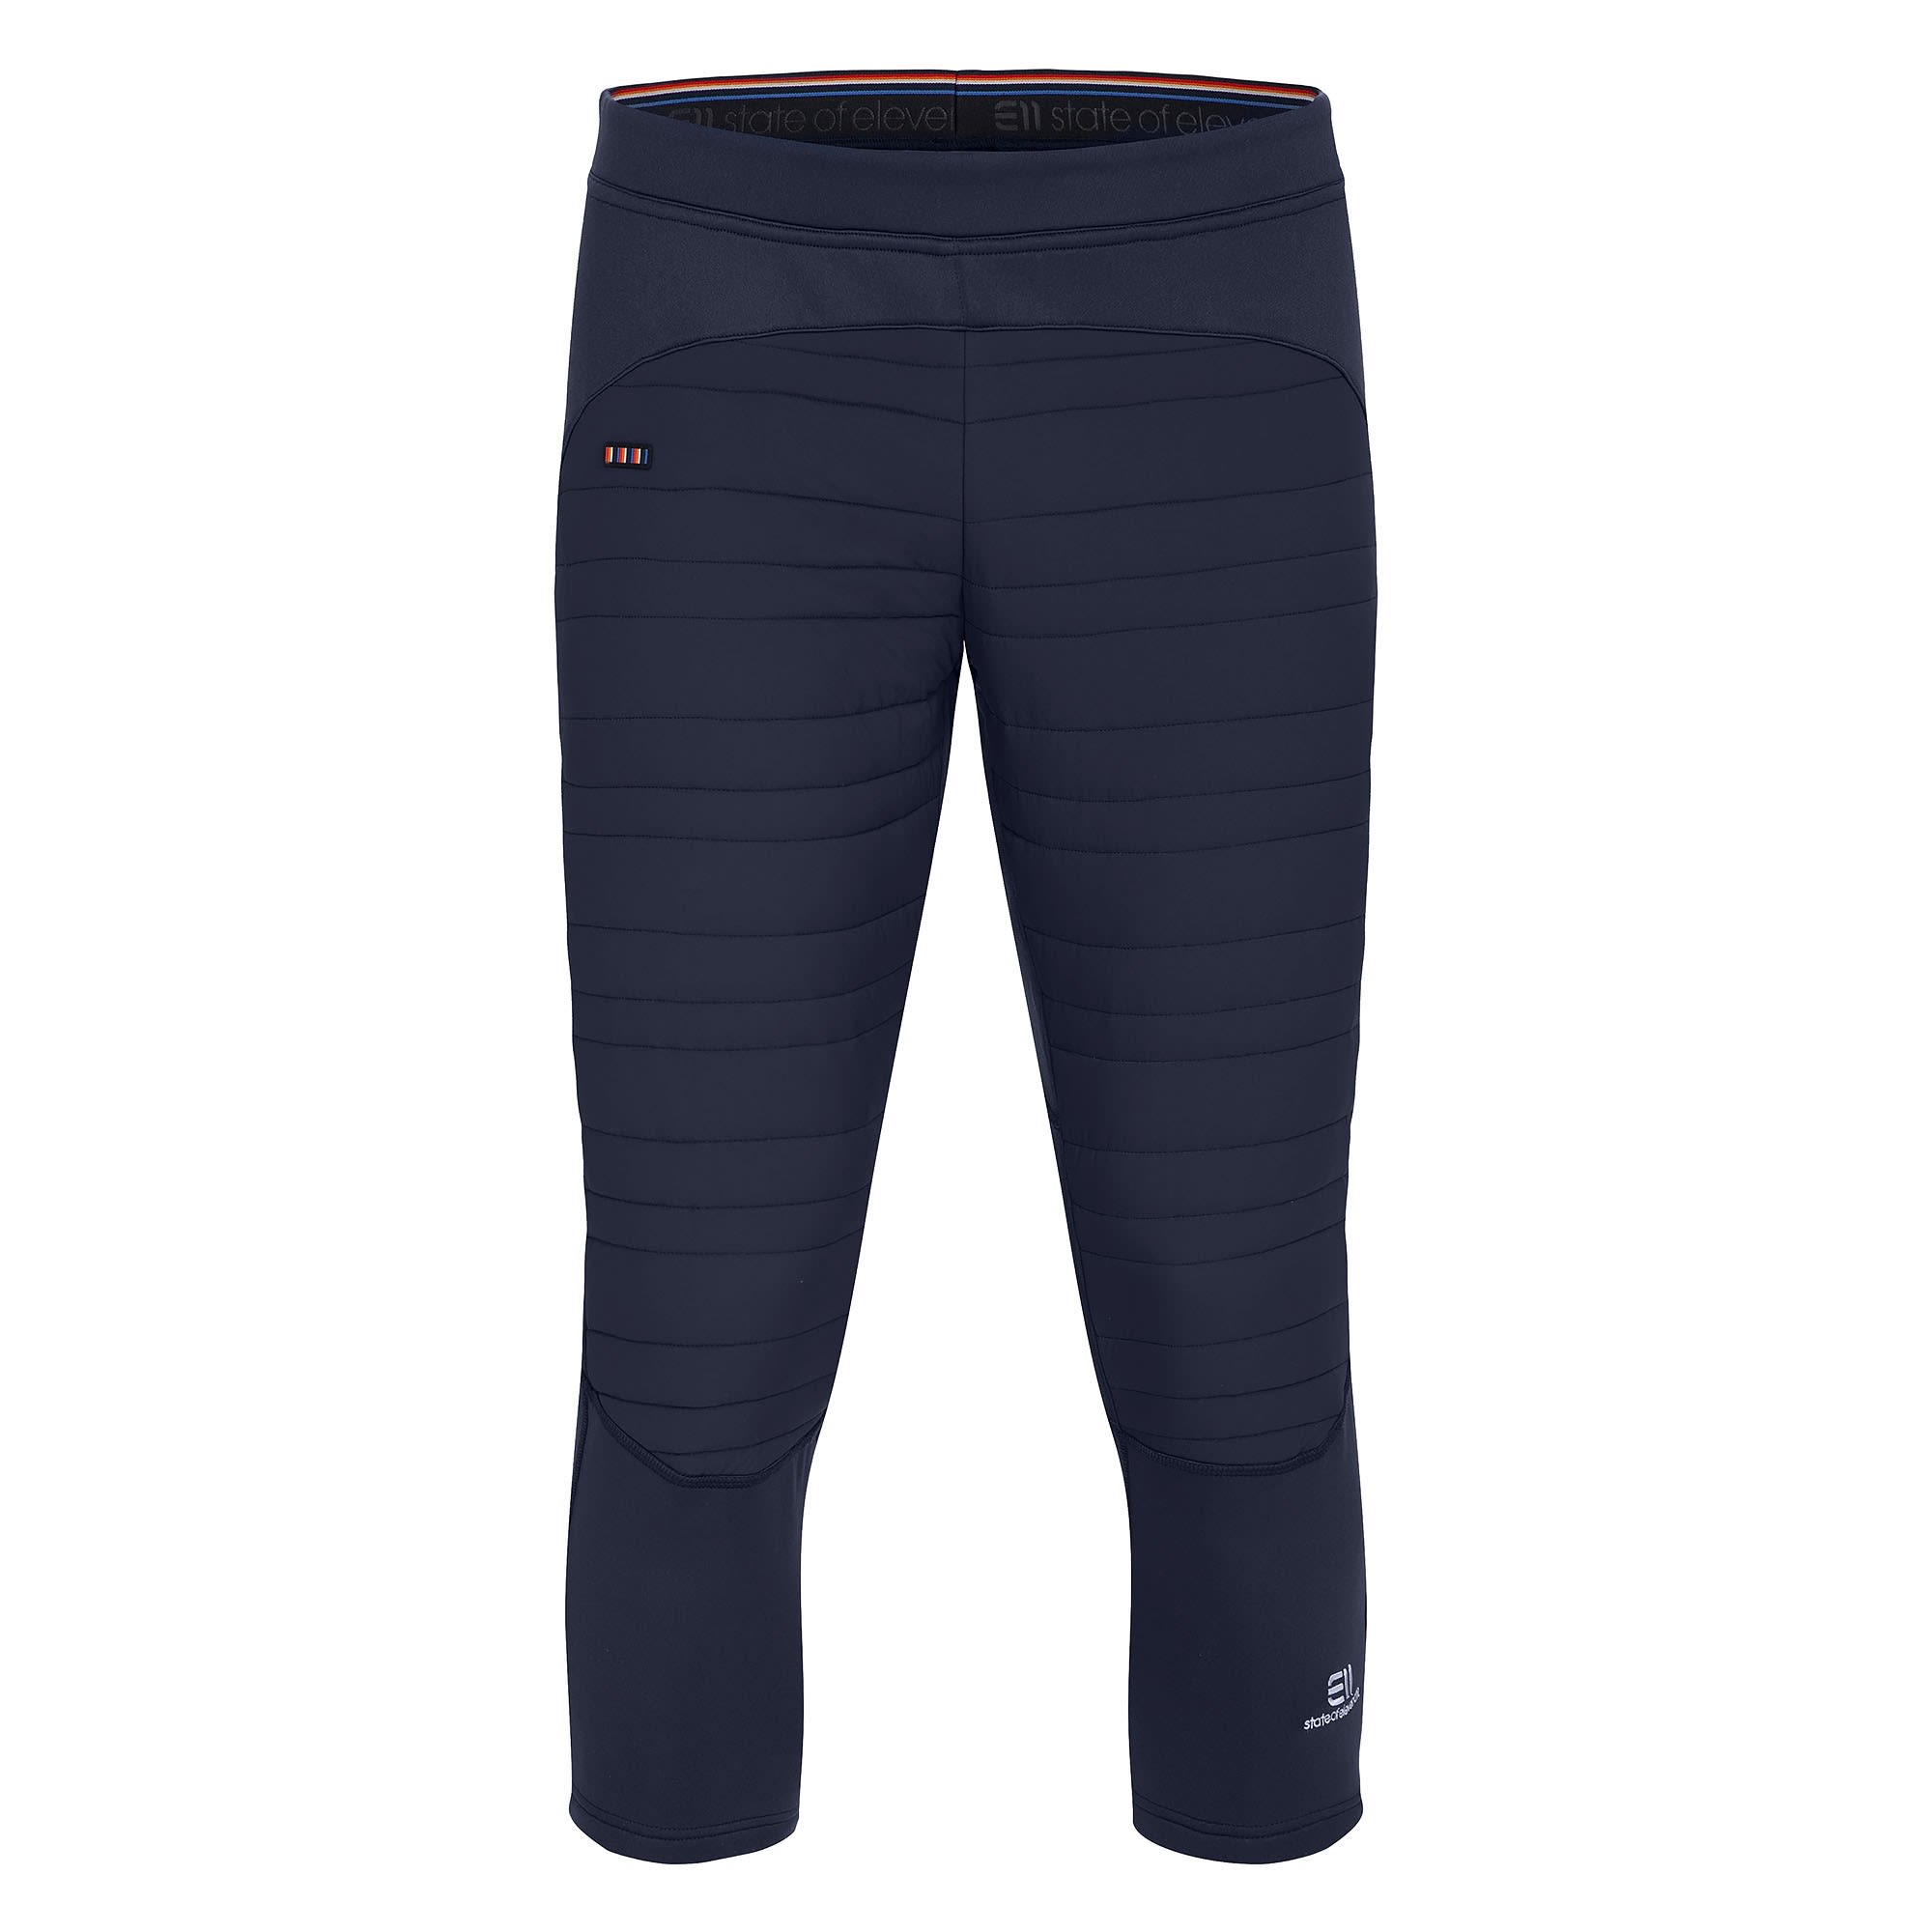 Elevenate Fusion Stretch Pants Blau- Male Hosen- Grsse XL - Farbe Dark Navy unter Elevenate